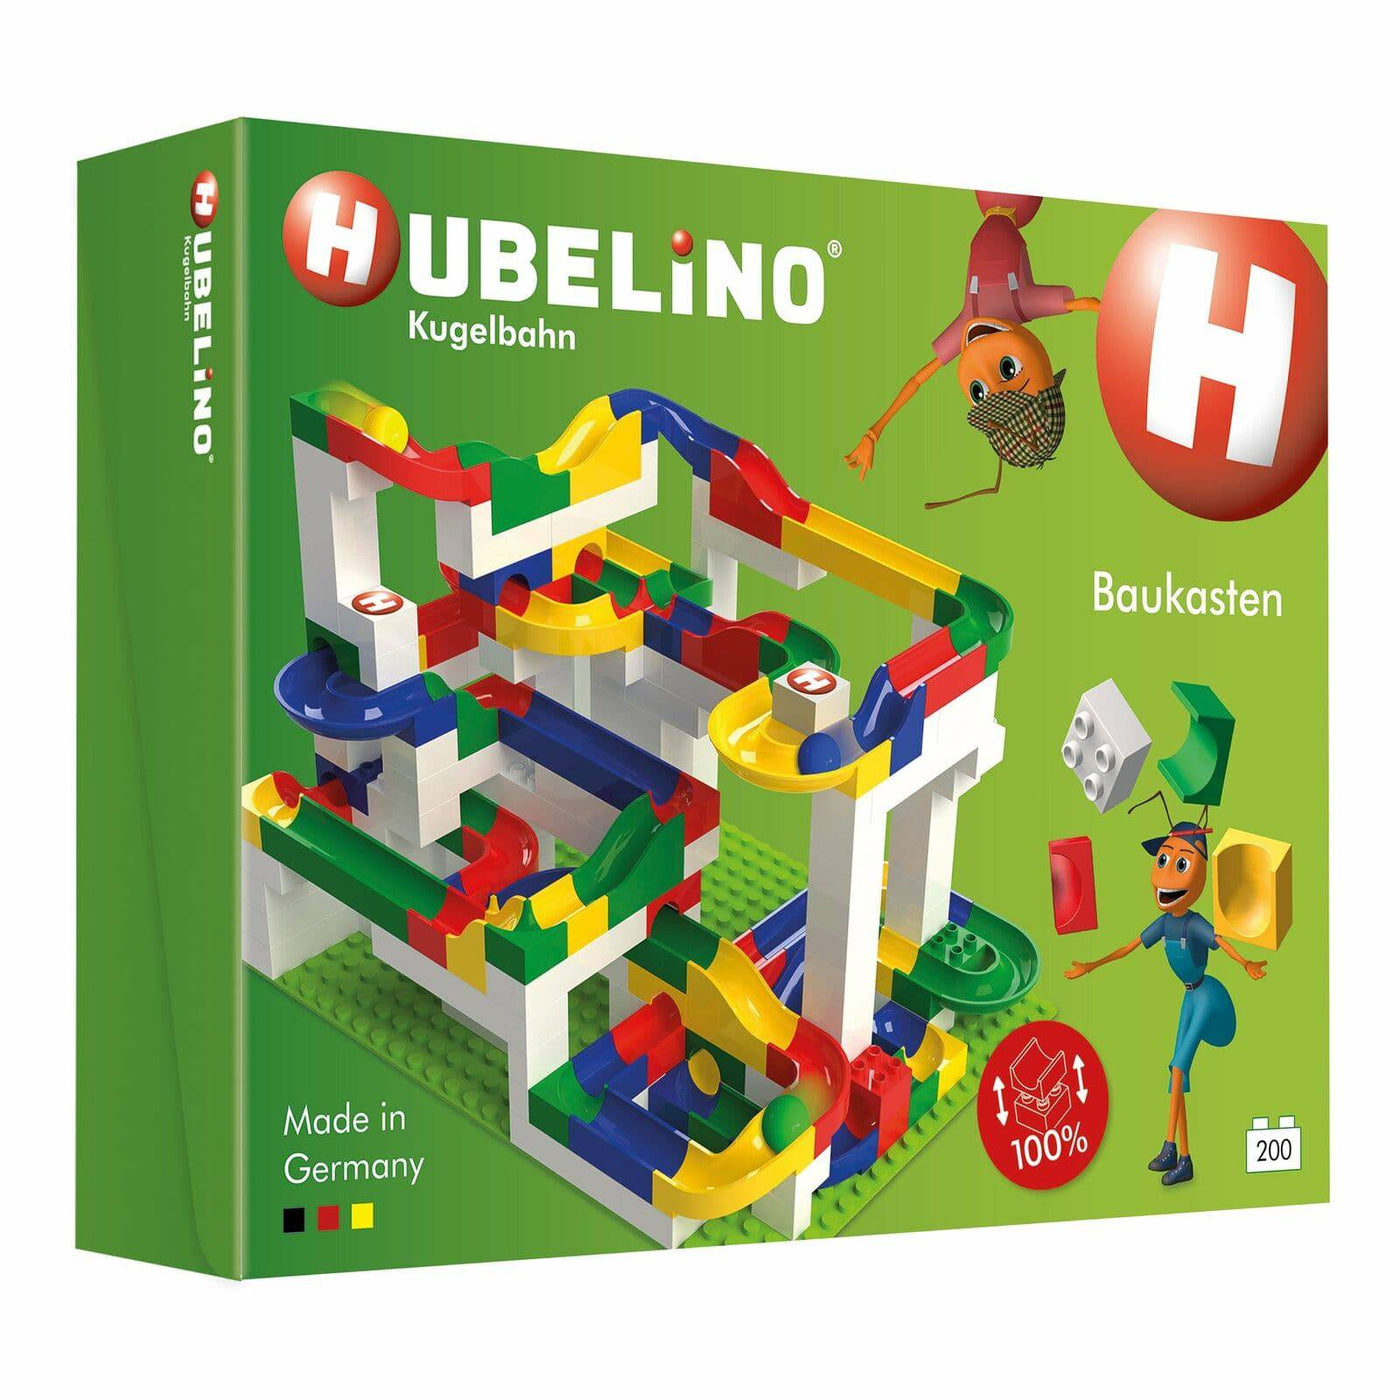 Hubelino Big Building Box (200 pcs) - HABA USA